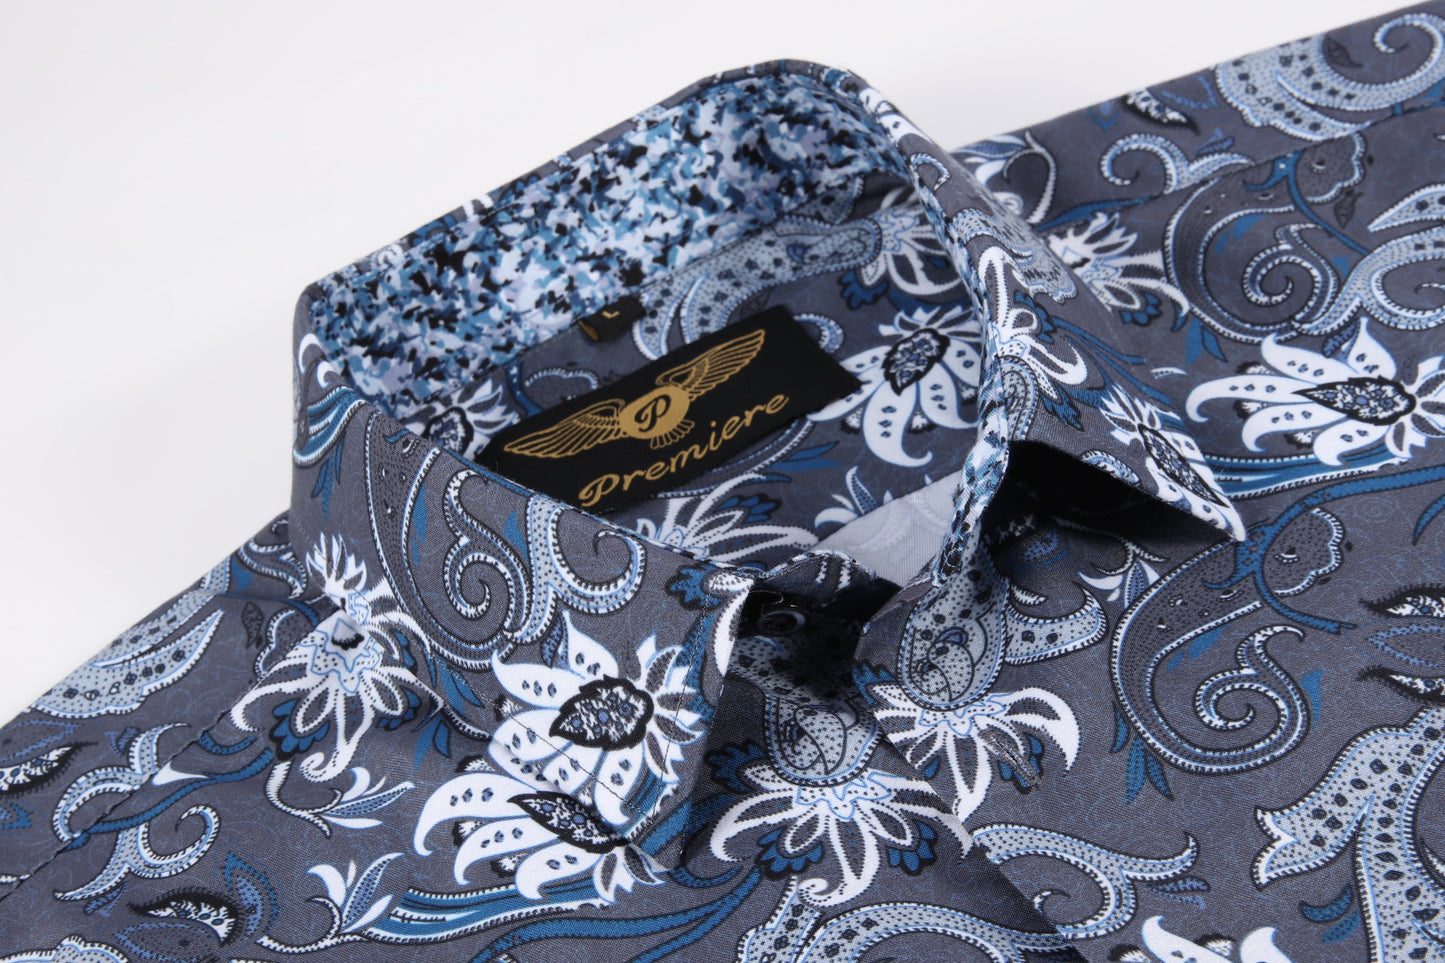 PREMIERE SHIRTS: GREY/BLUE/WHITE PAISLEY – Premiere Designer Shirts